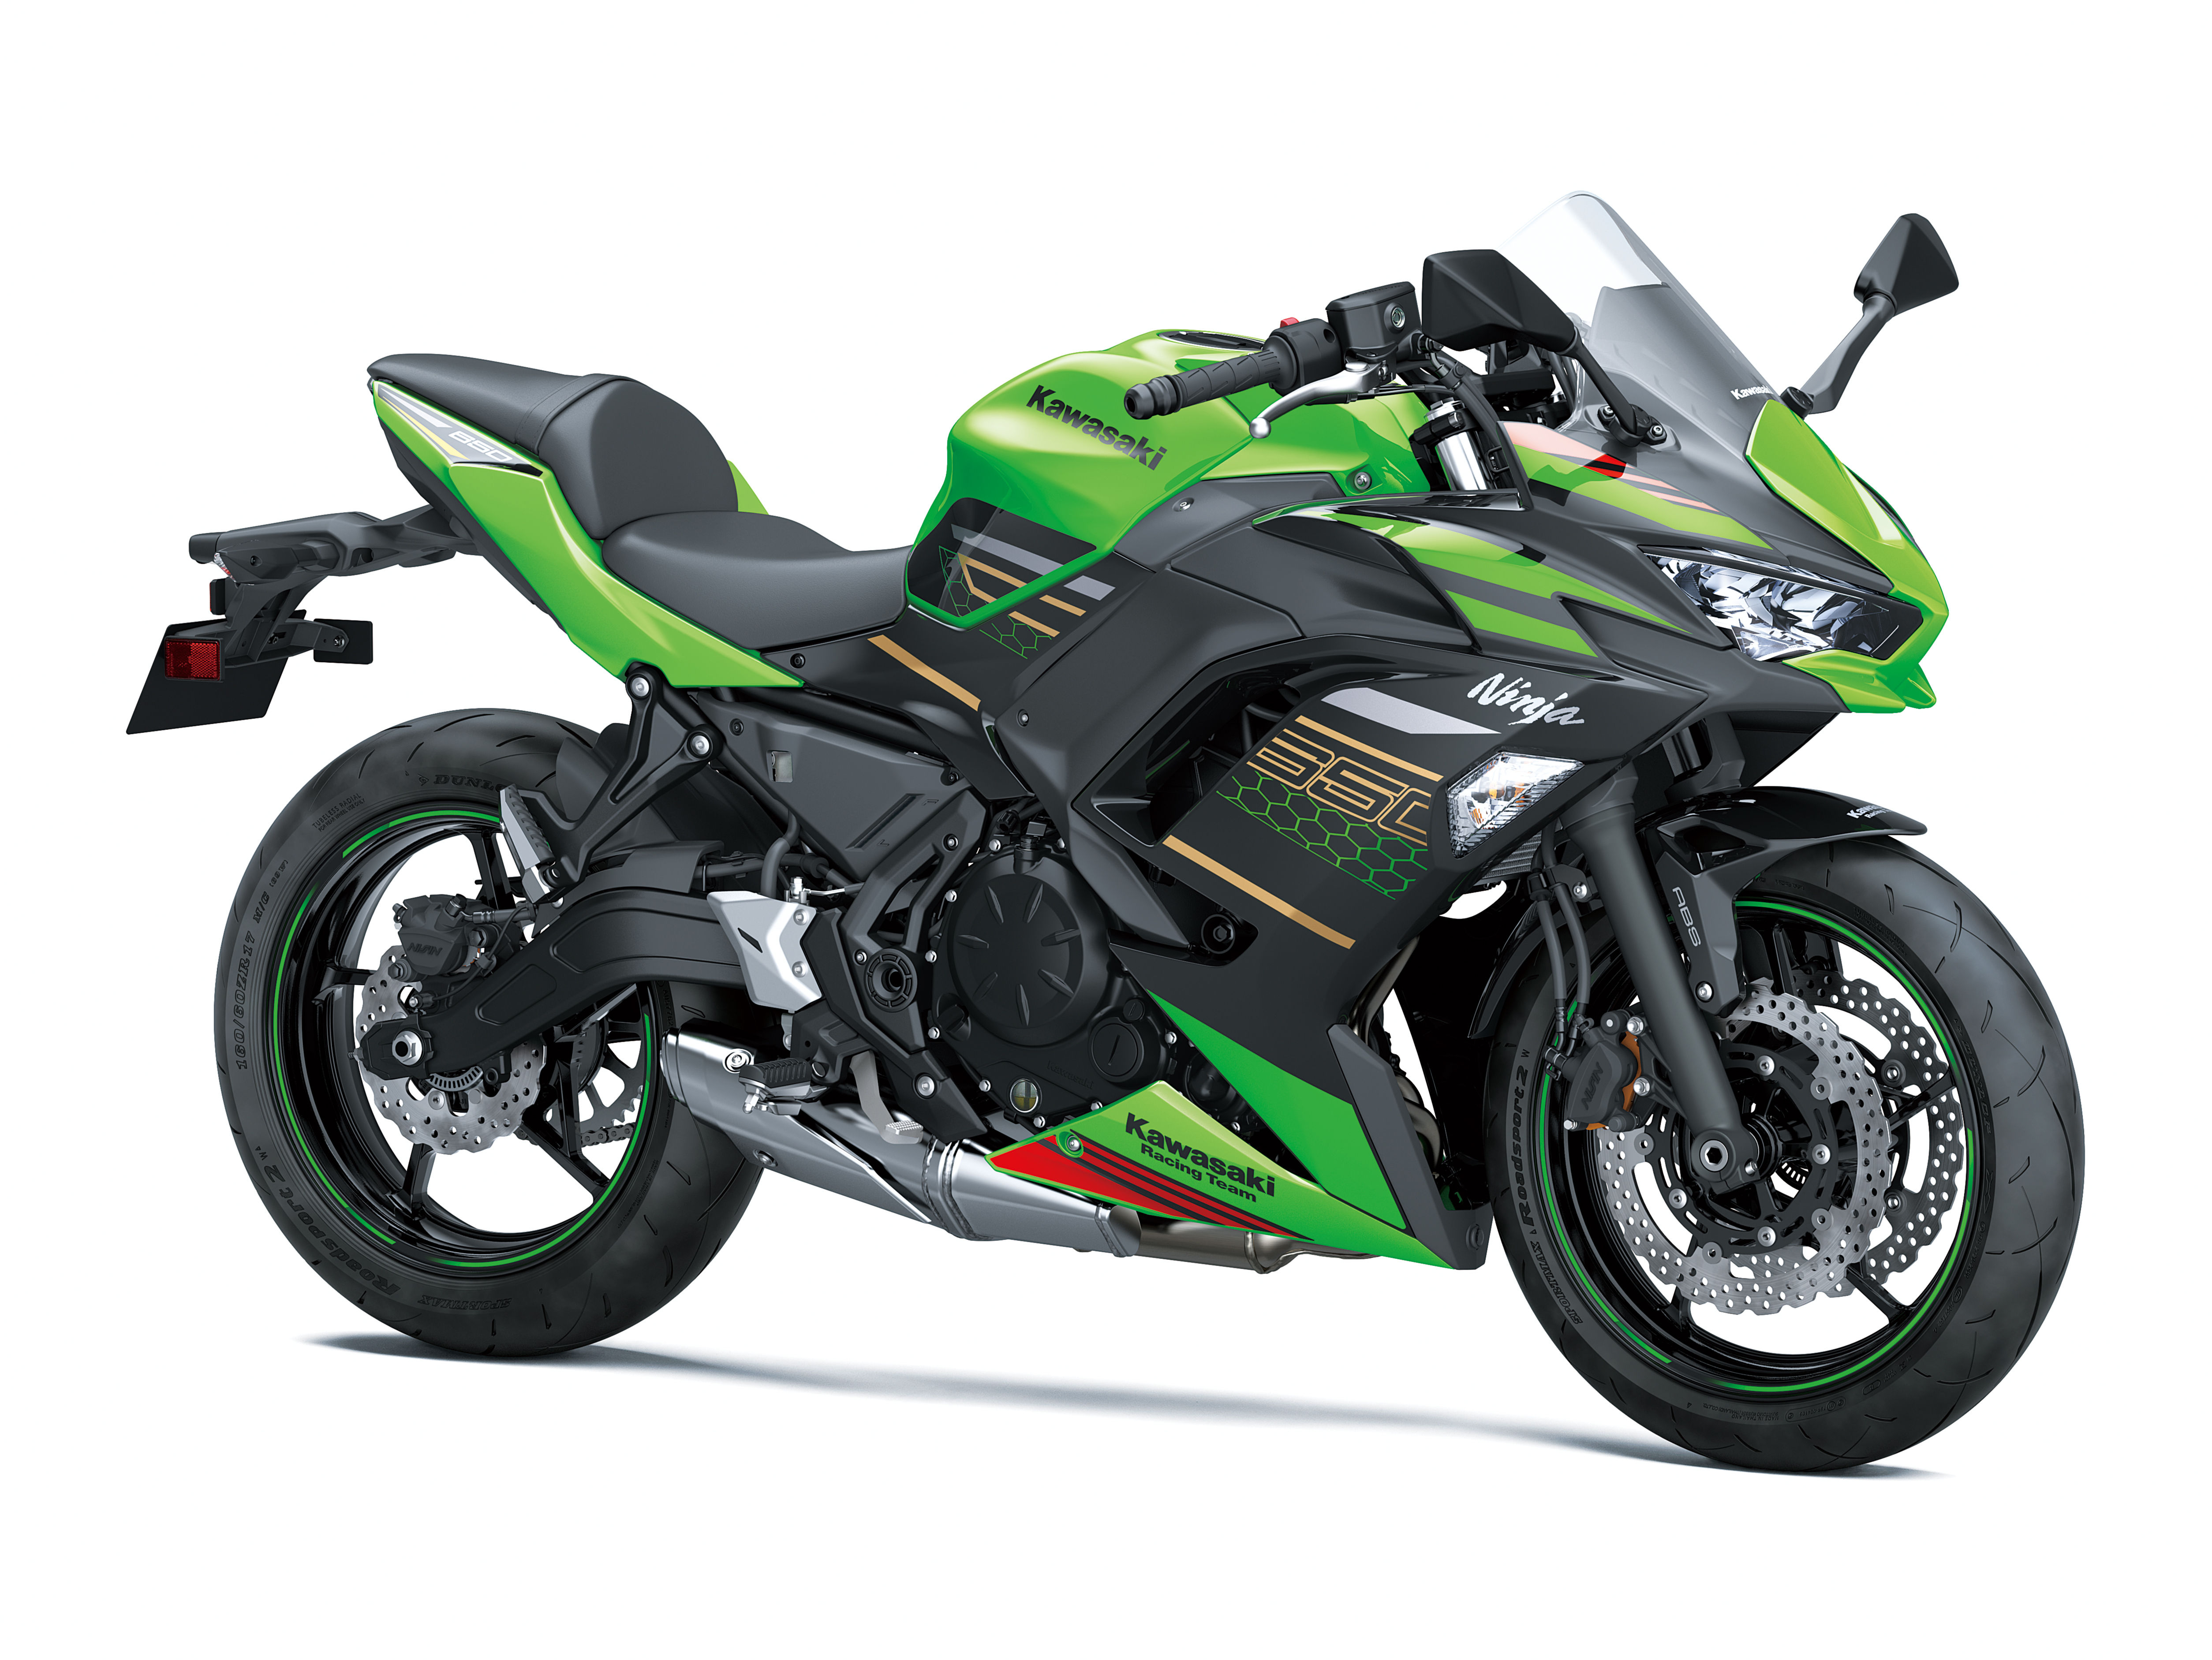 2020 Kawasaki Ninja 650 Unveiled In India